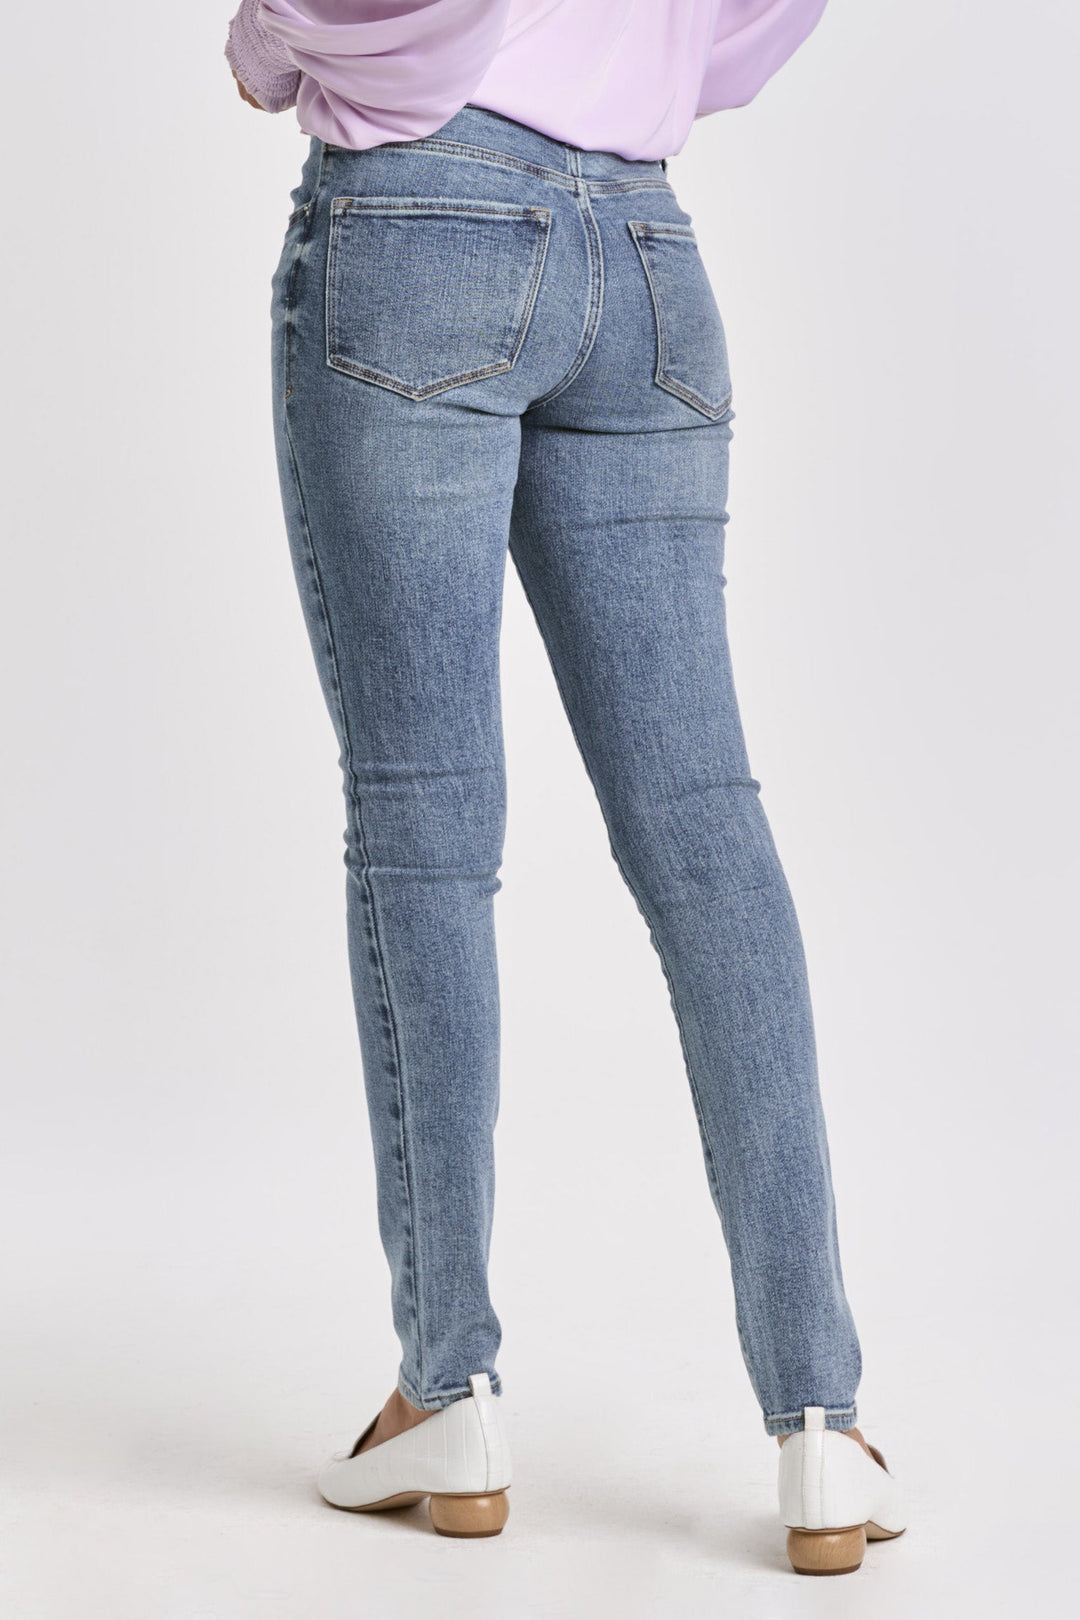 joyrich-mid-rise-cuffed-skinny-jeans-aralina